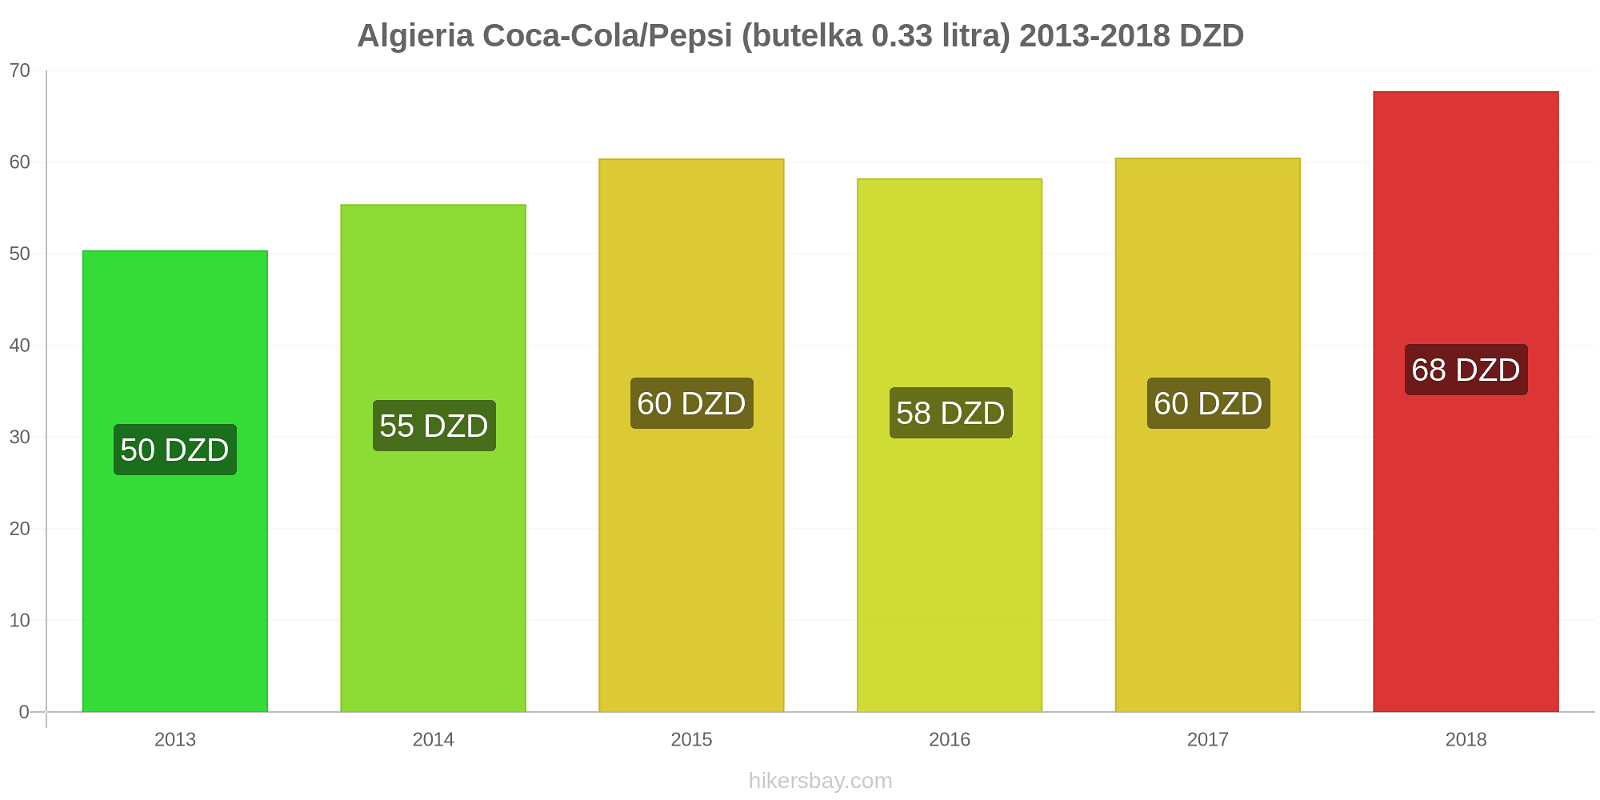 Algieria zmiany cen Coca-Cola/Pepsi (butelka 0.33 litra) hikersbay.com